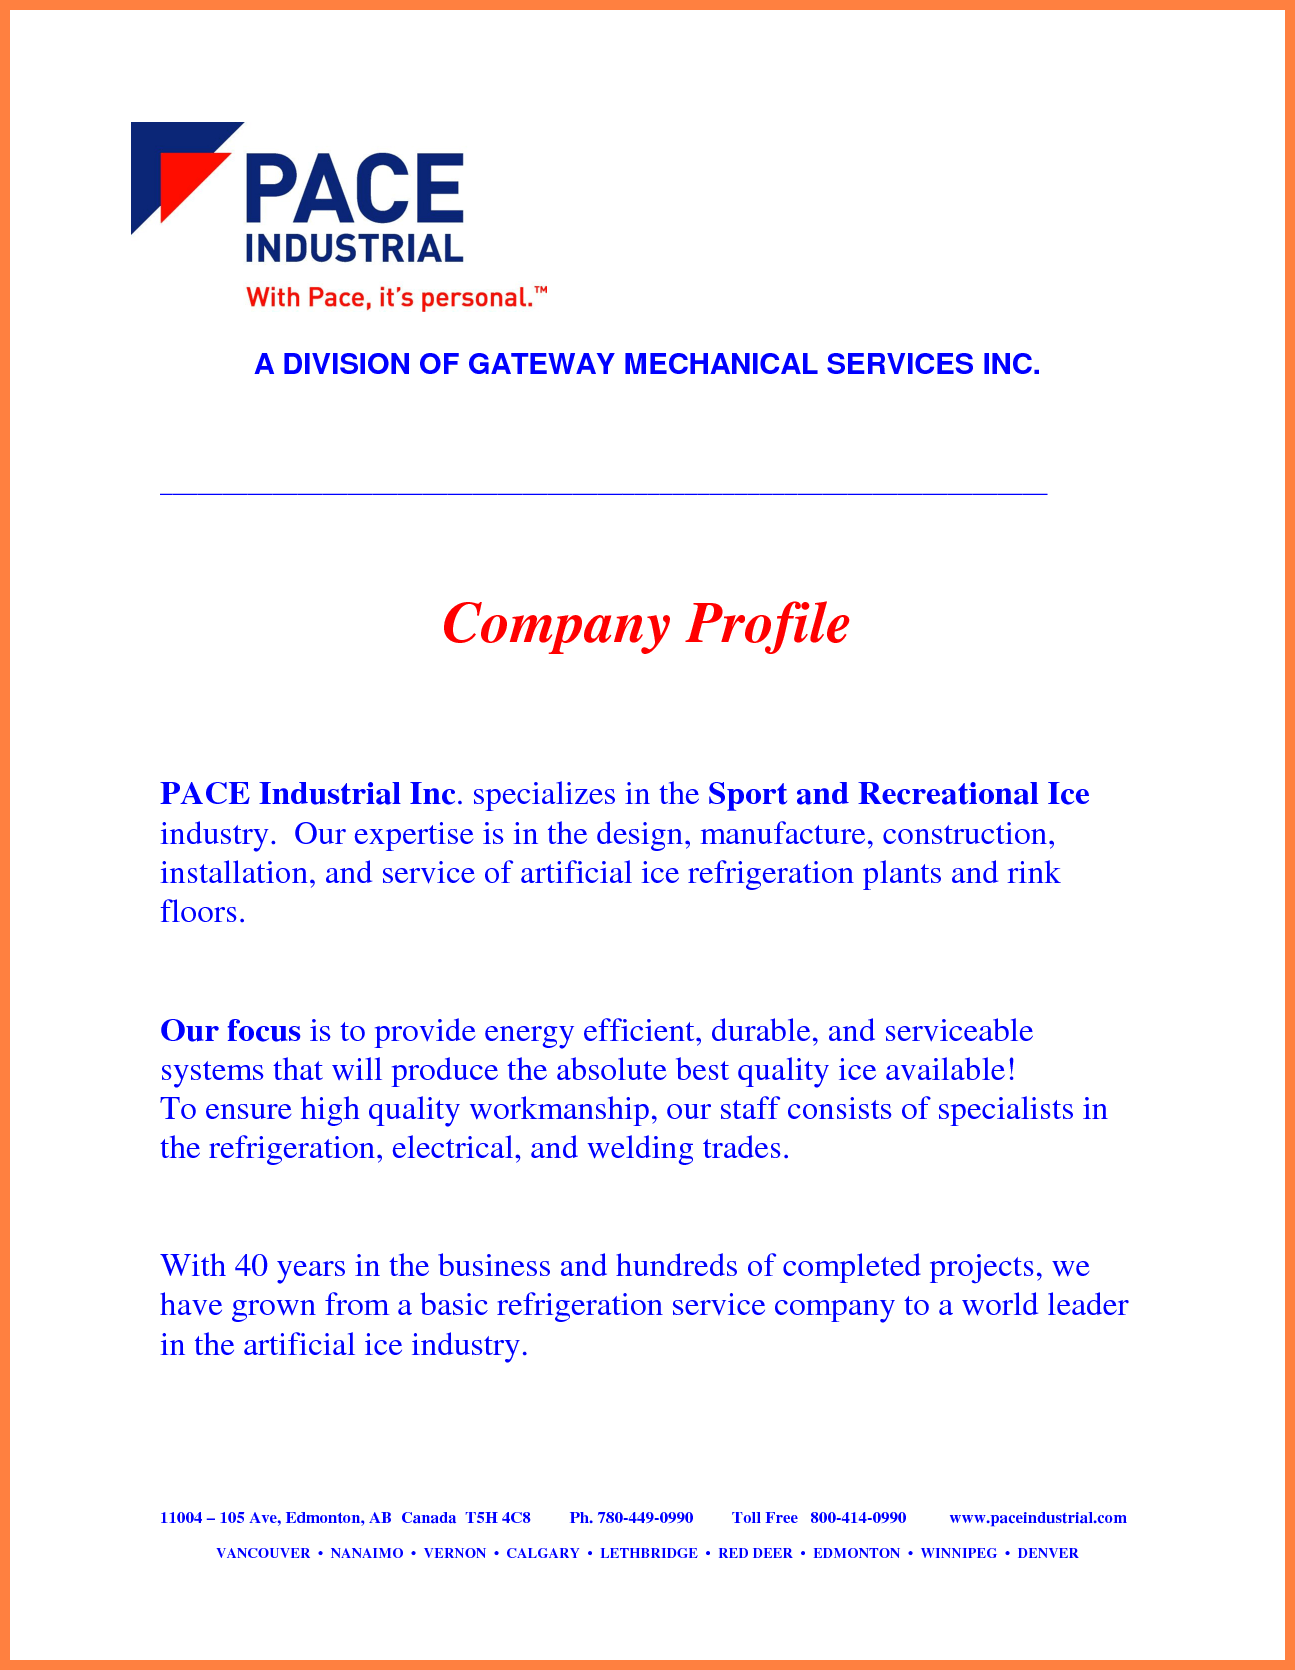 mediacentral company profile